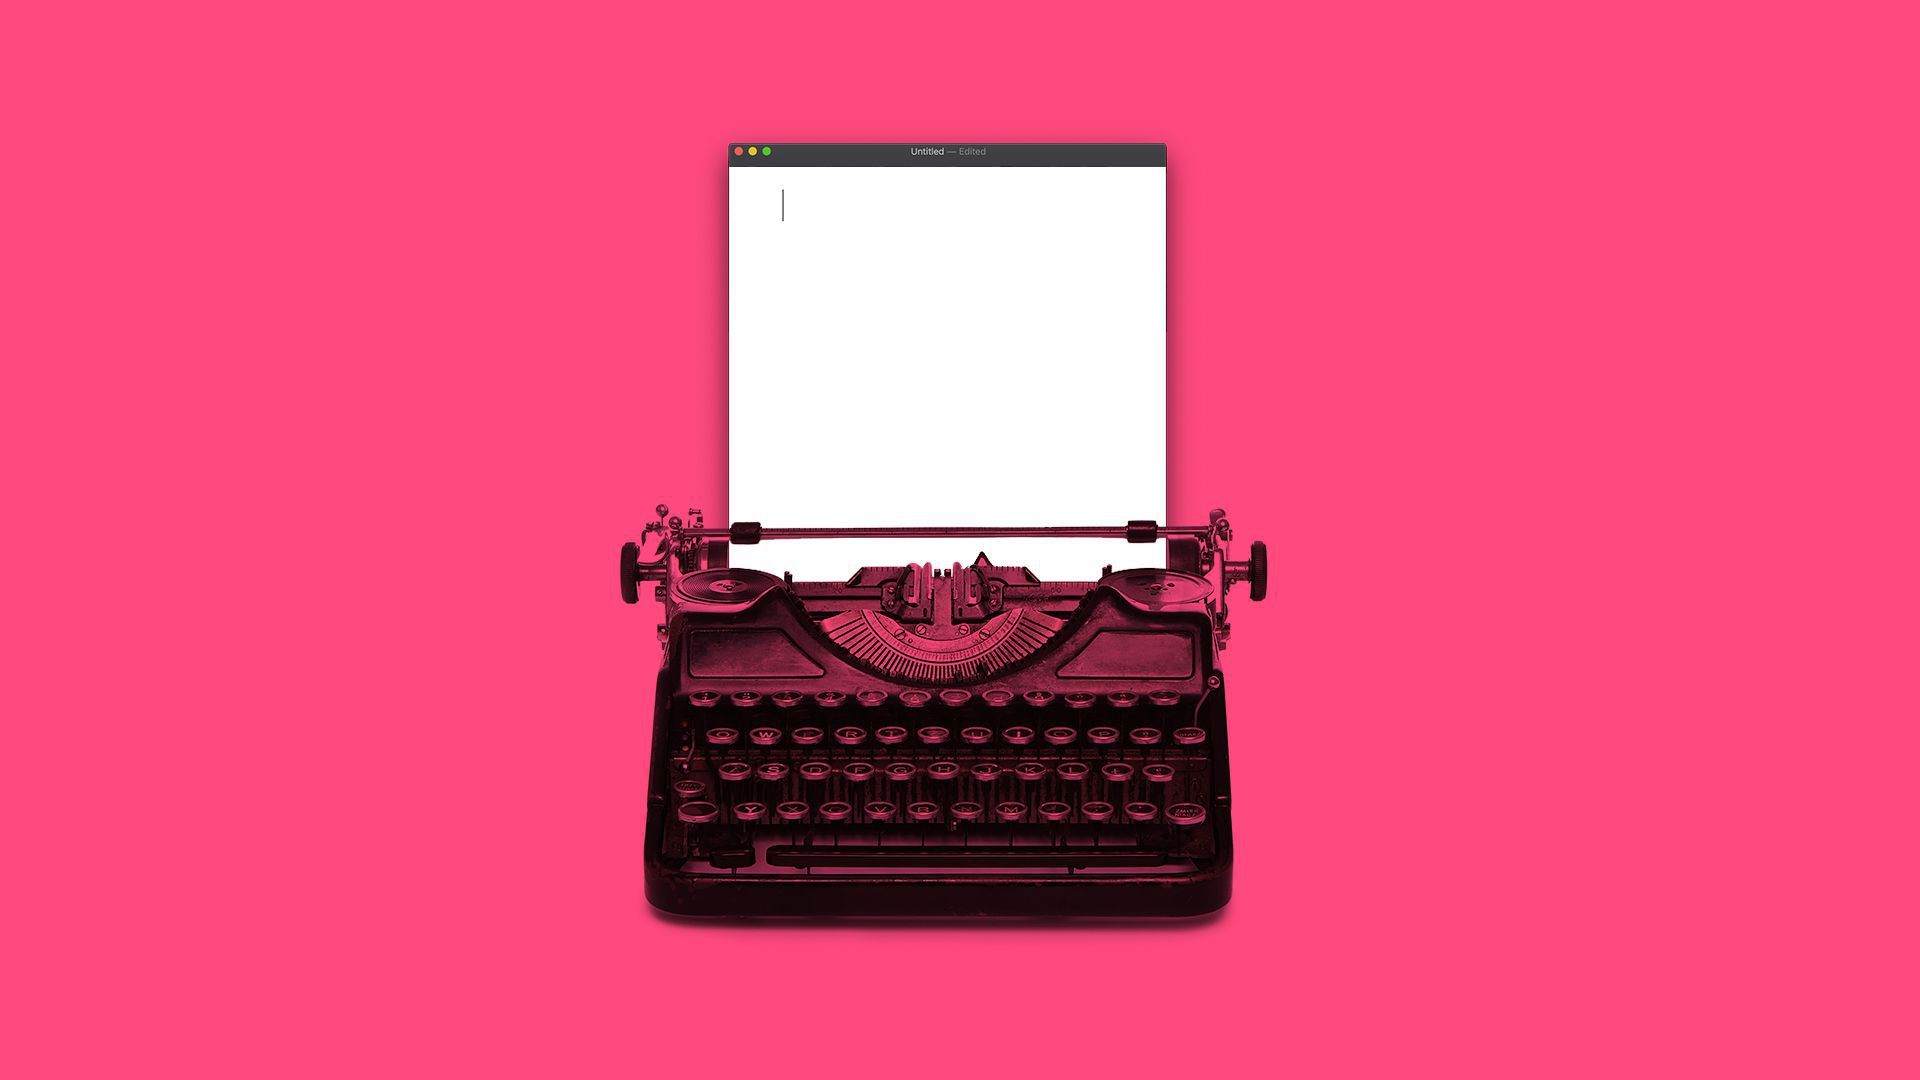 Typewriter illustration